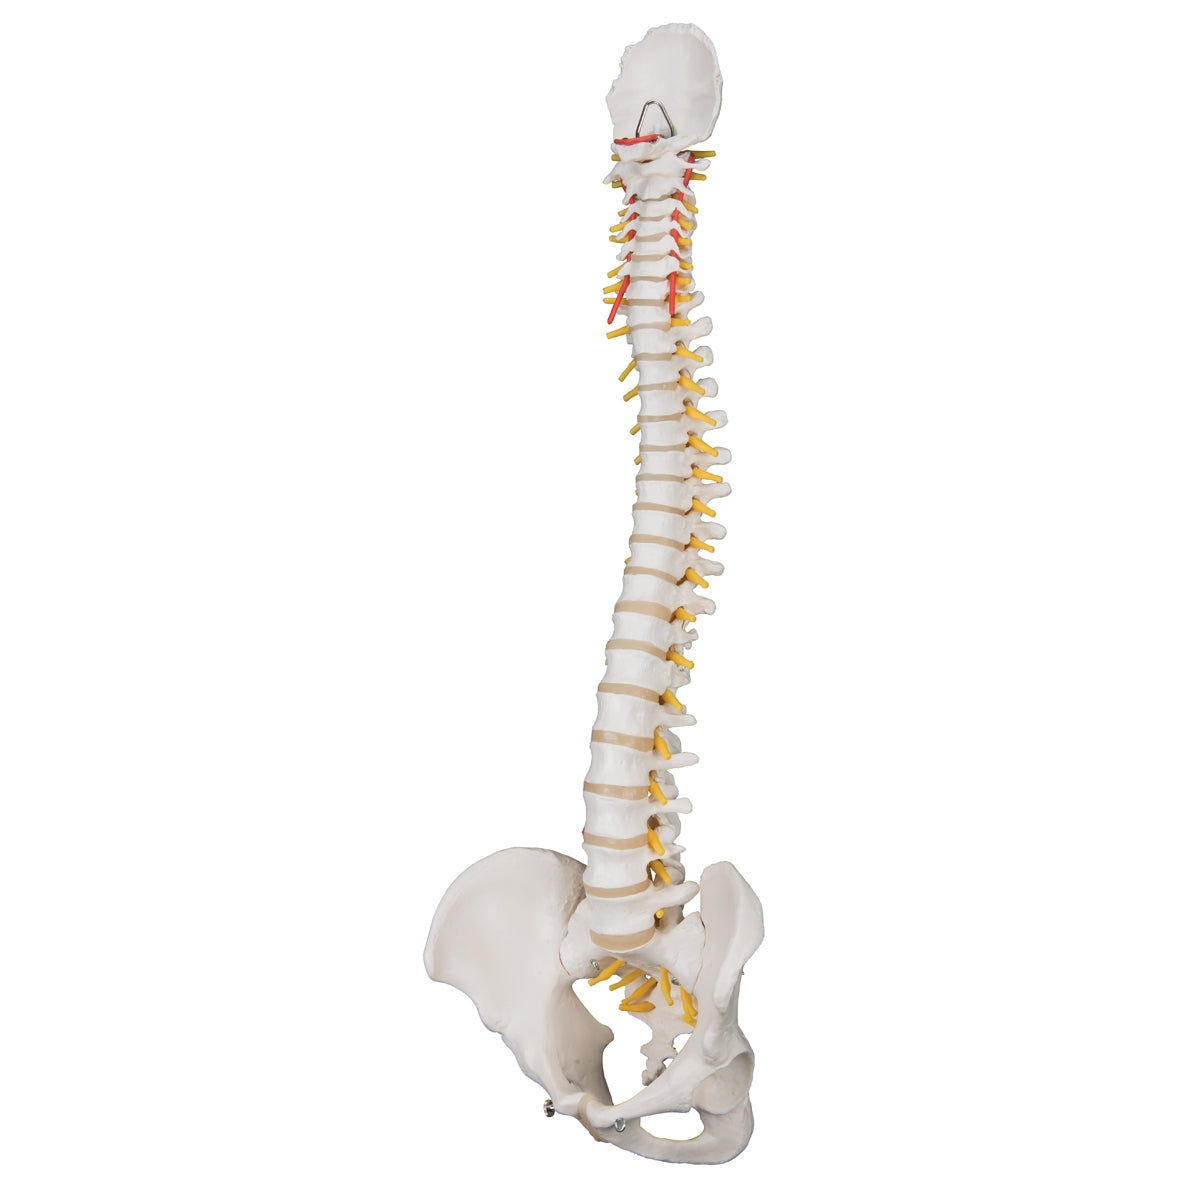 lassic Flexible Human Spine Model